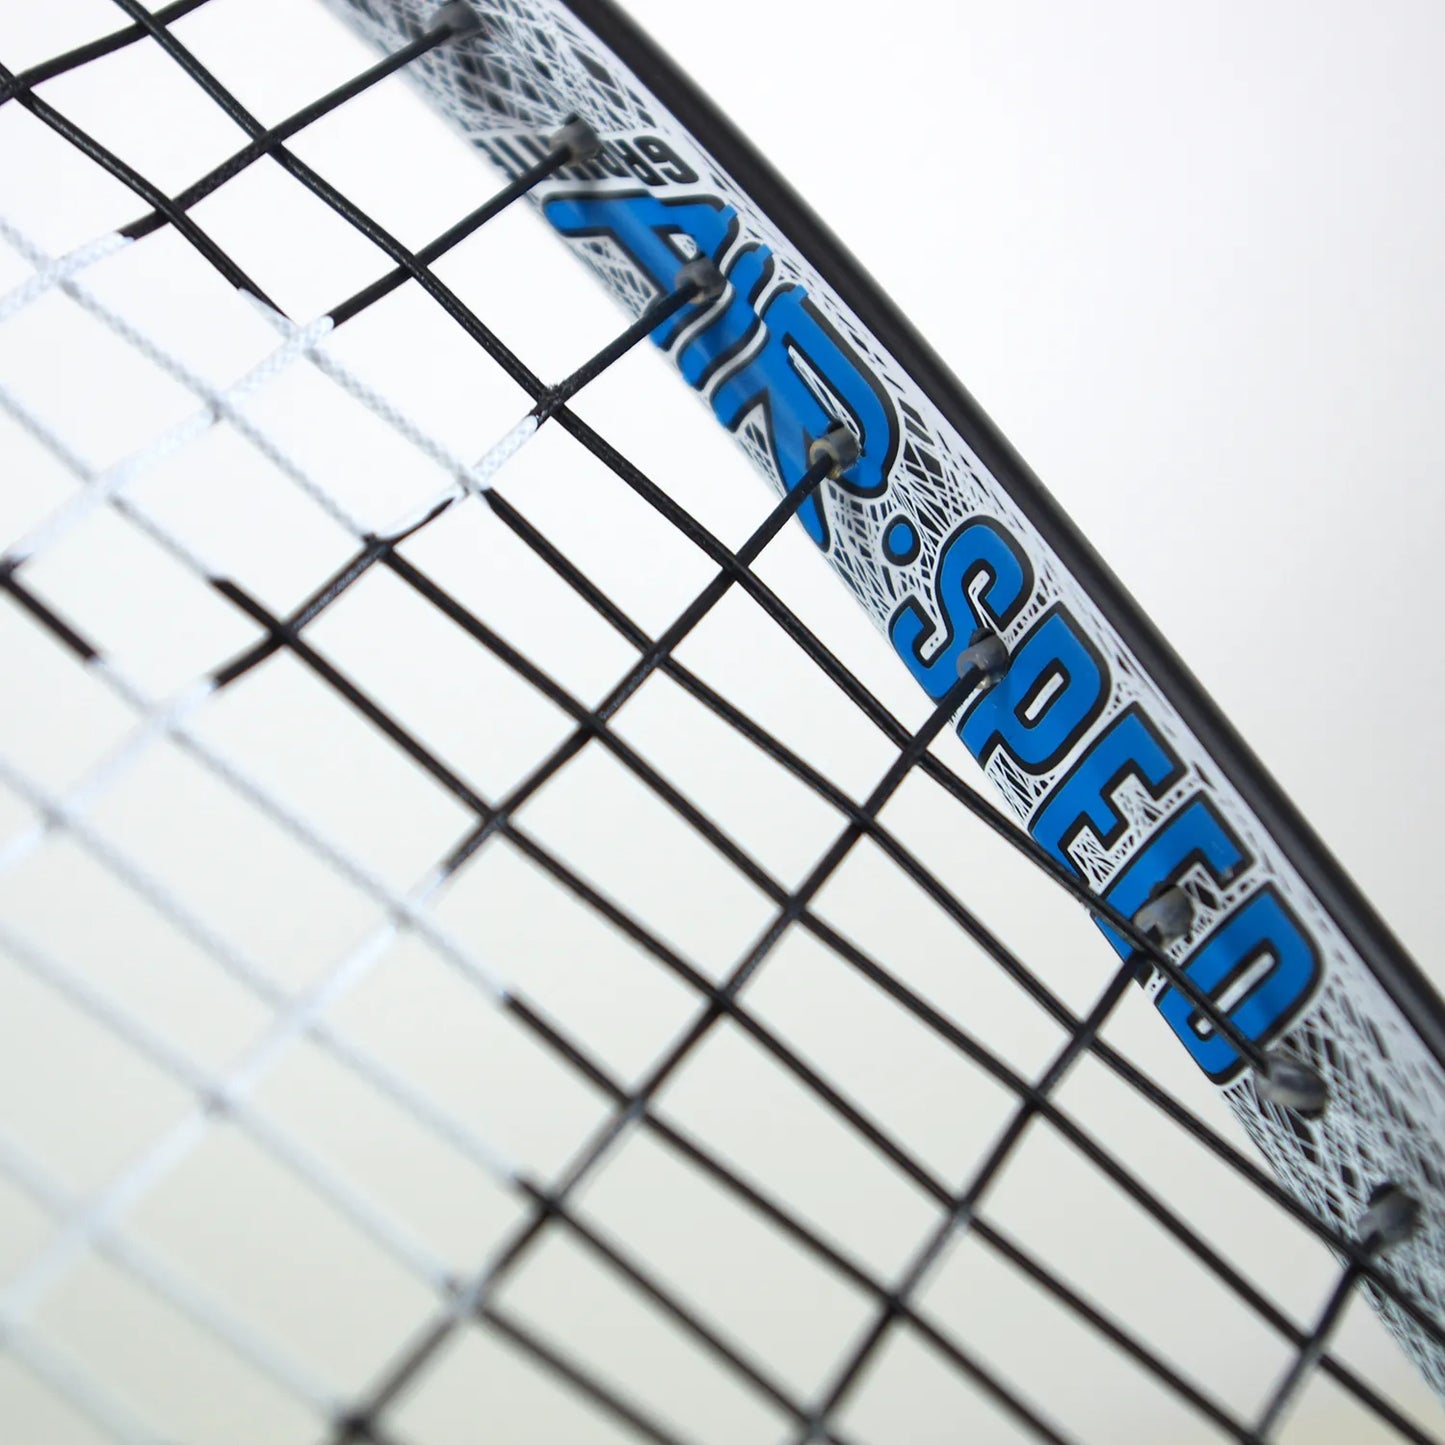 Karakal Air Speed Squash Racket